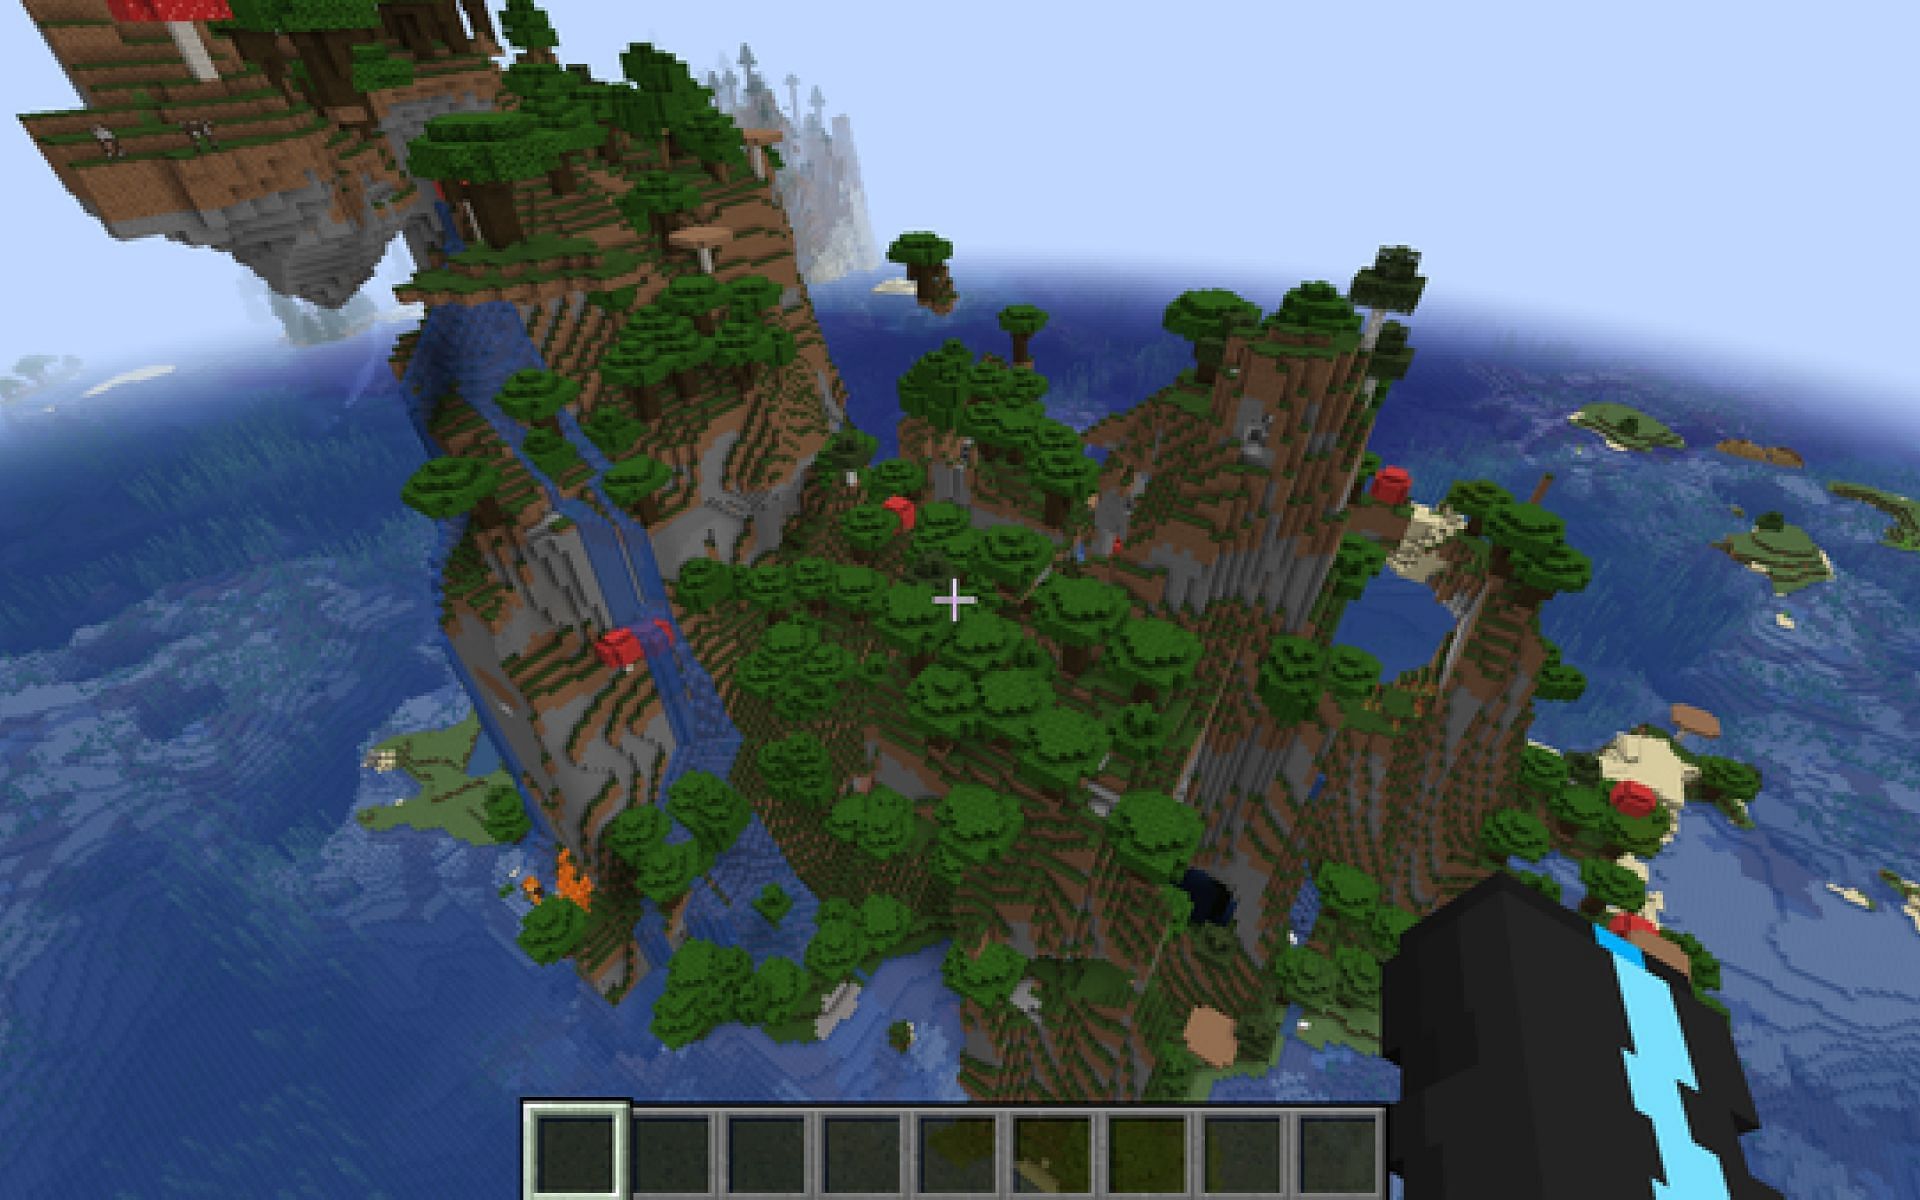 A player flies over a dark oak forest. (Image via u/theoneandonlychou on Reddit.)